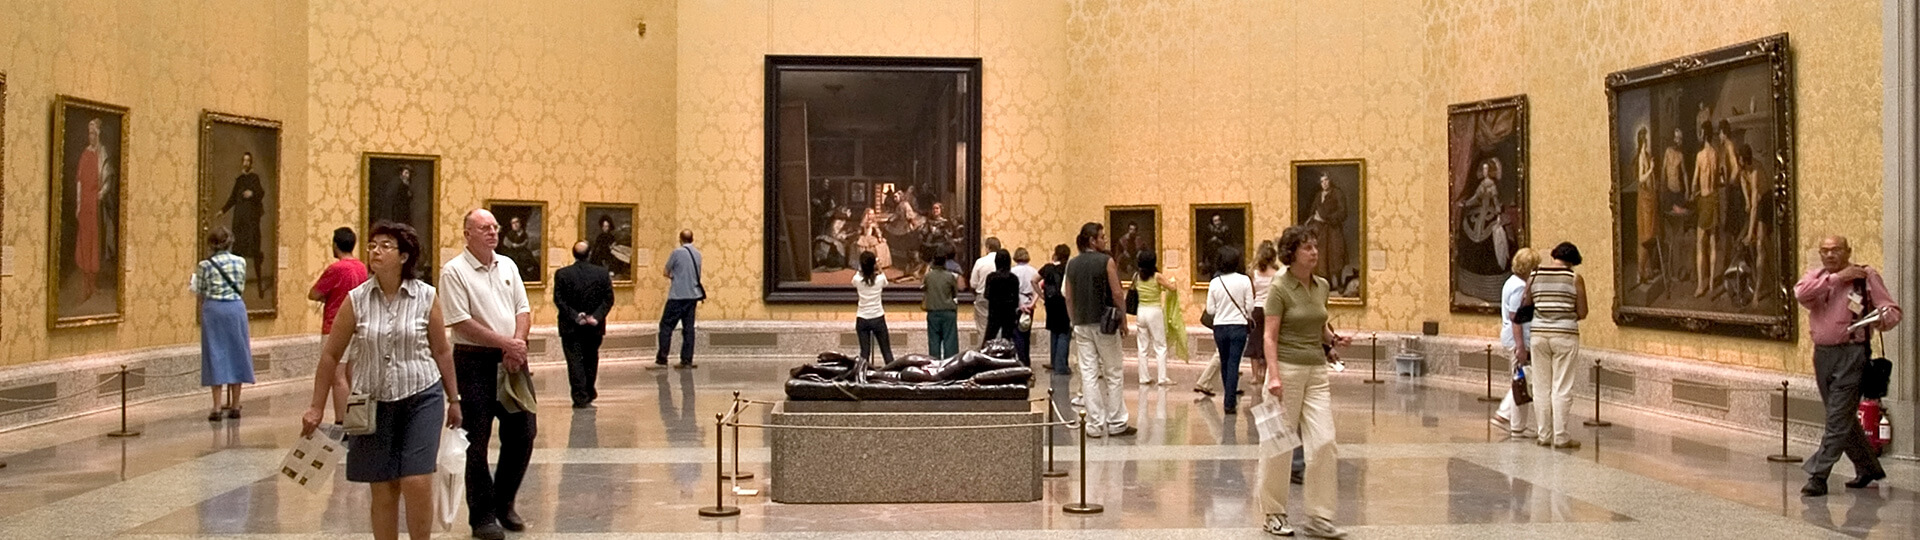 Sala Velázquez, Museo del Prado. Madrid